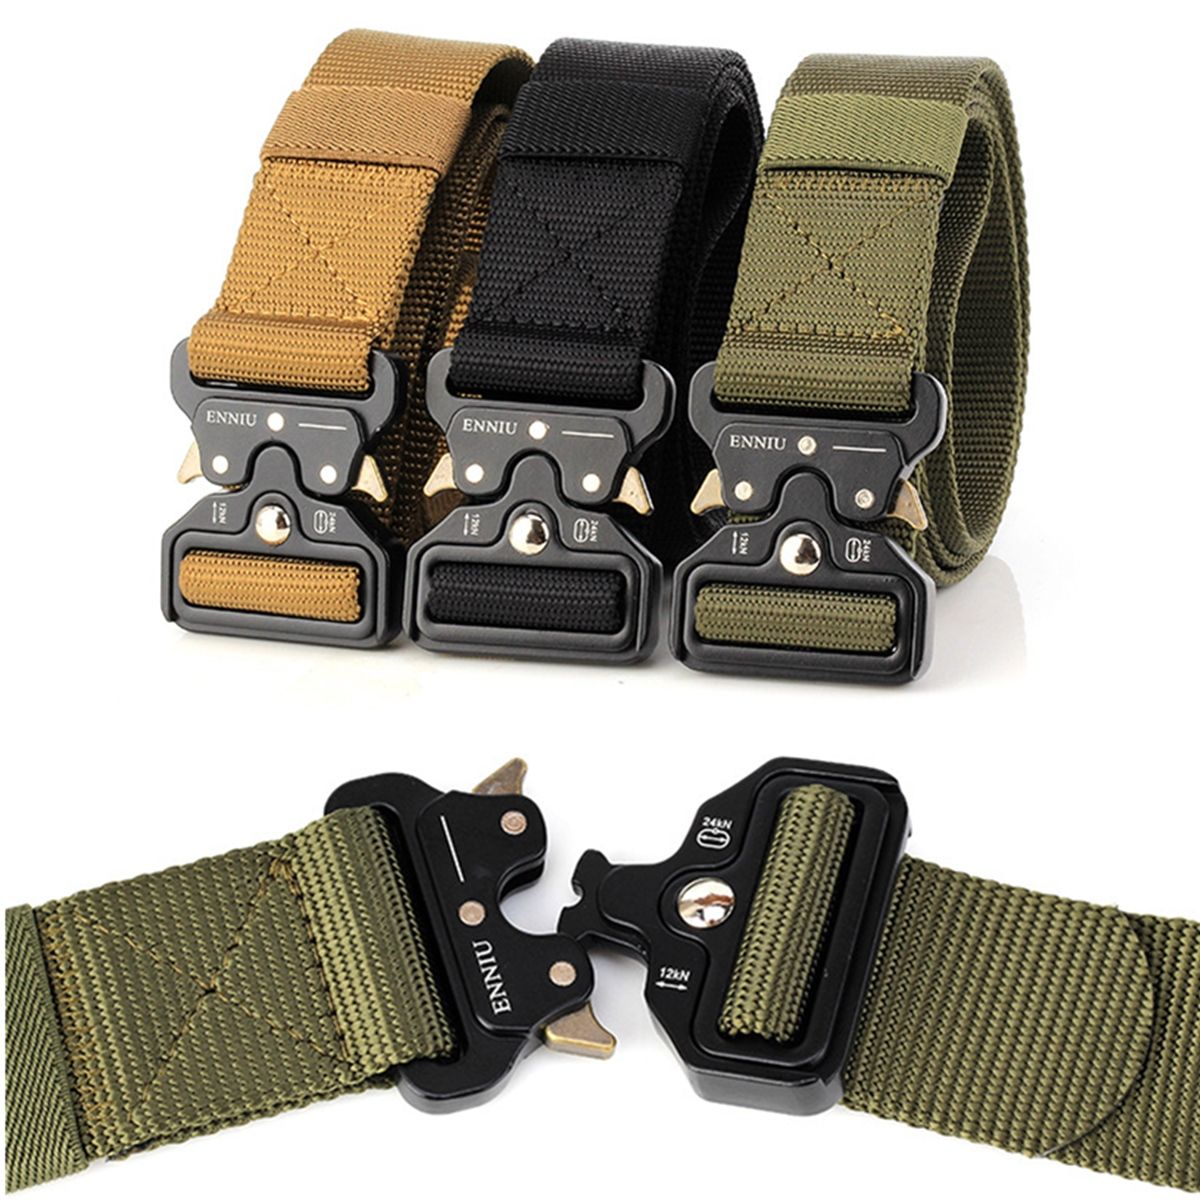 Survival-Military-Nylon-Belts-For-Men-Tactical-Belt-Waist-Belt-Strap-Military-Emergency-EDC-Gadget-1290490